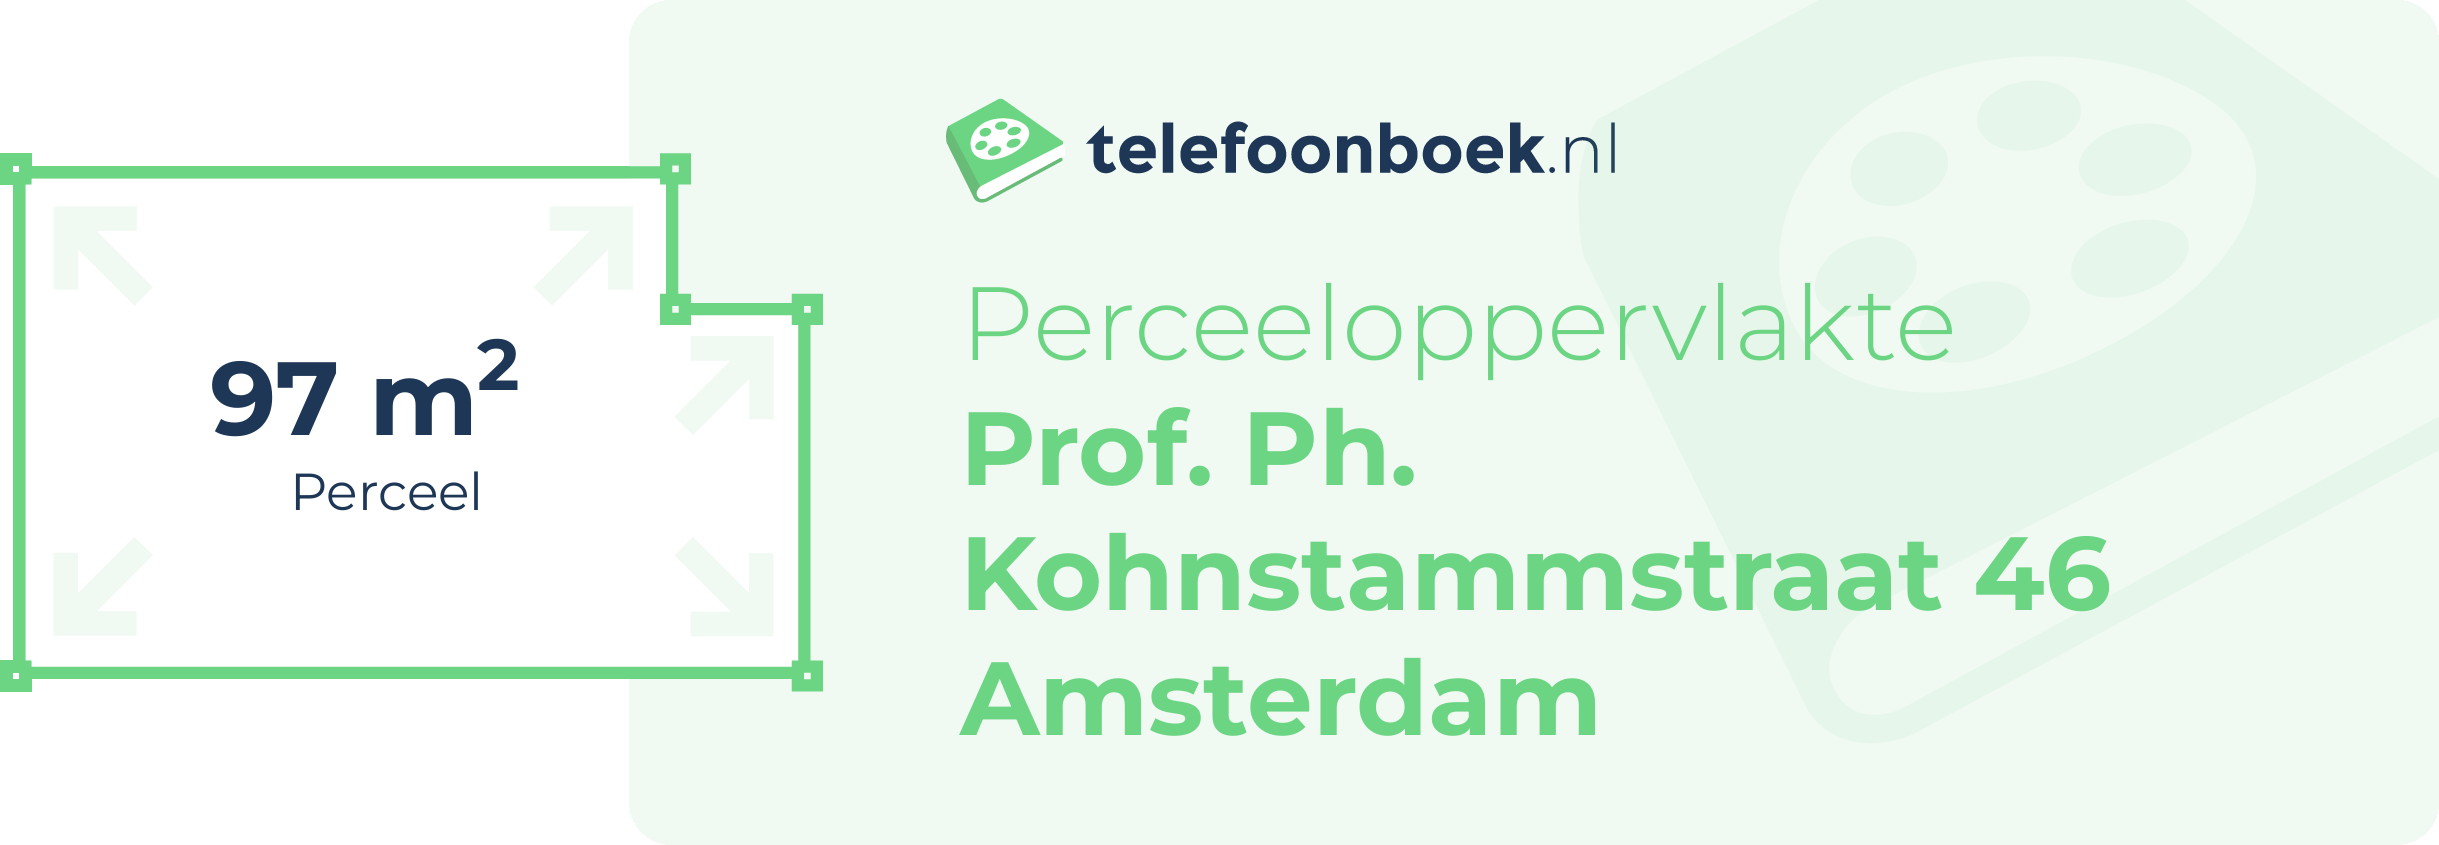 Perceeloppervlakte Prof. Ph. Kohnstammstraat 46 Amsterdam